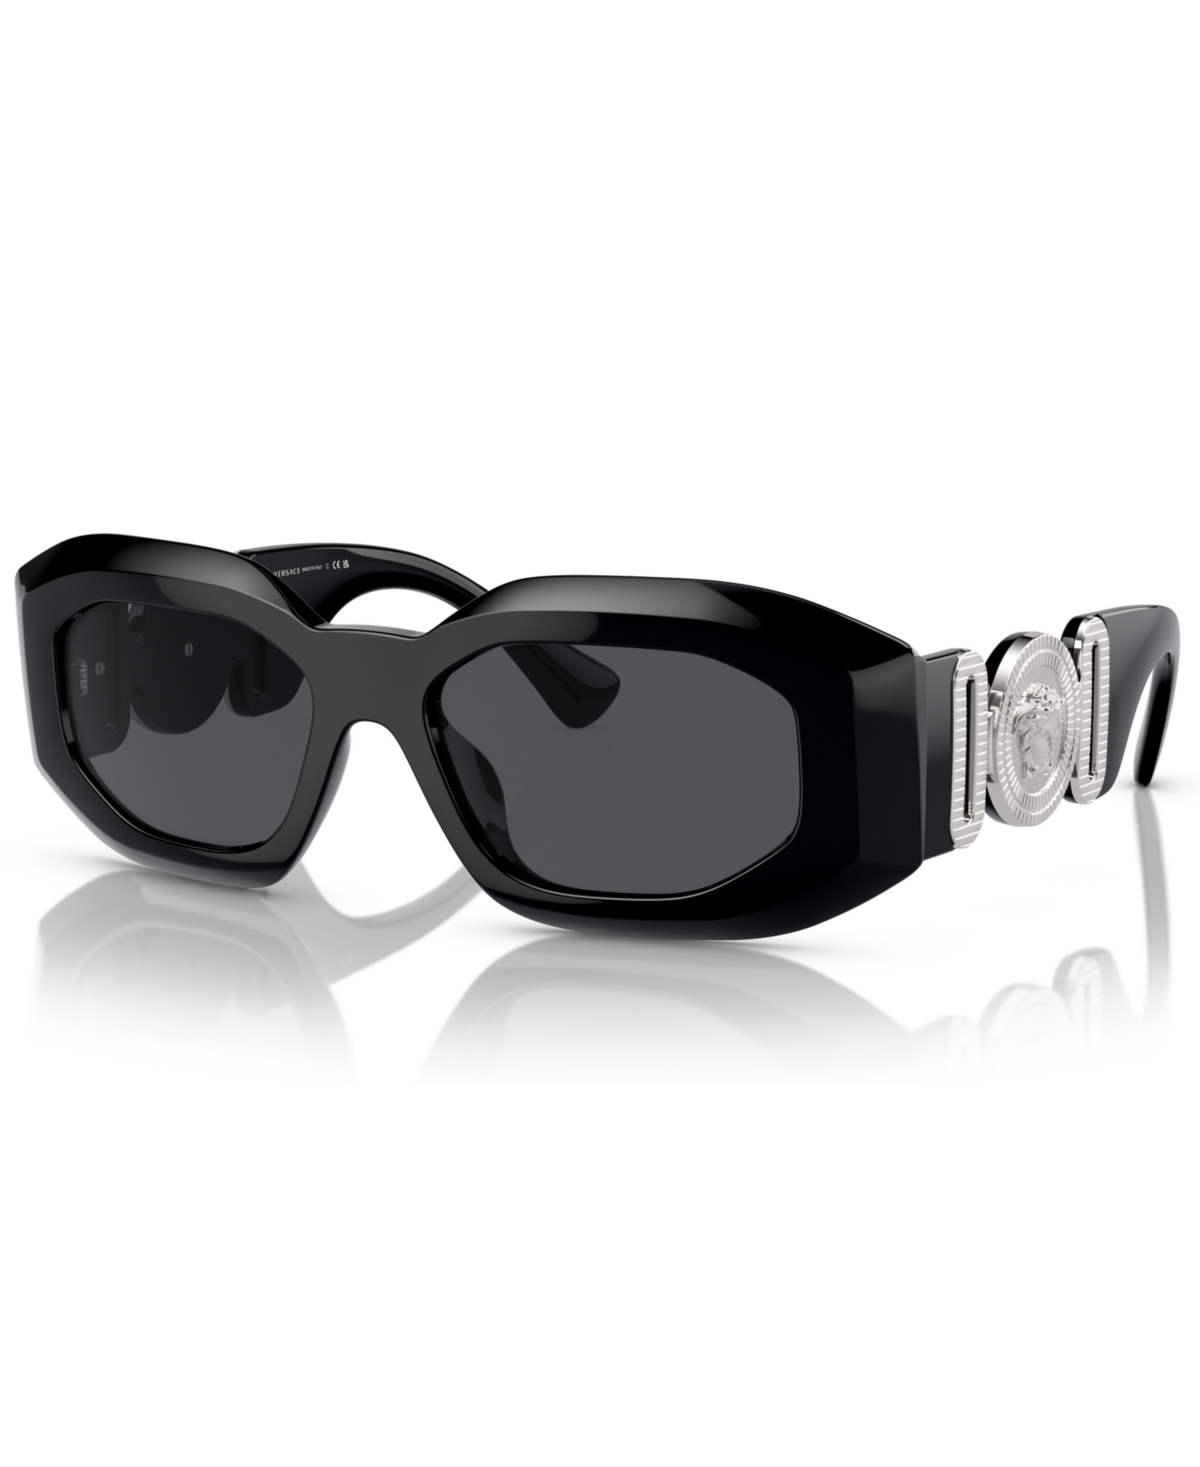 Men's Sunglasses VE4425U - Black